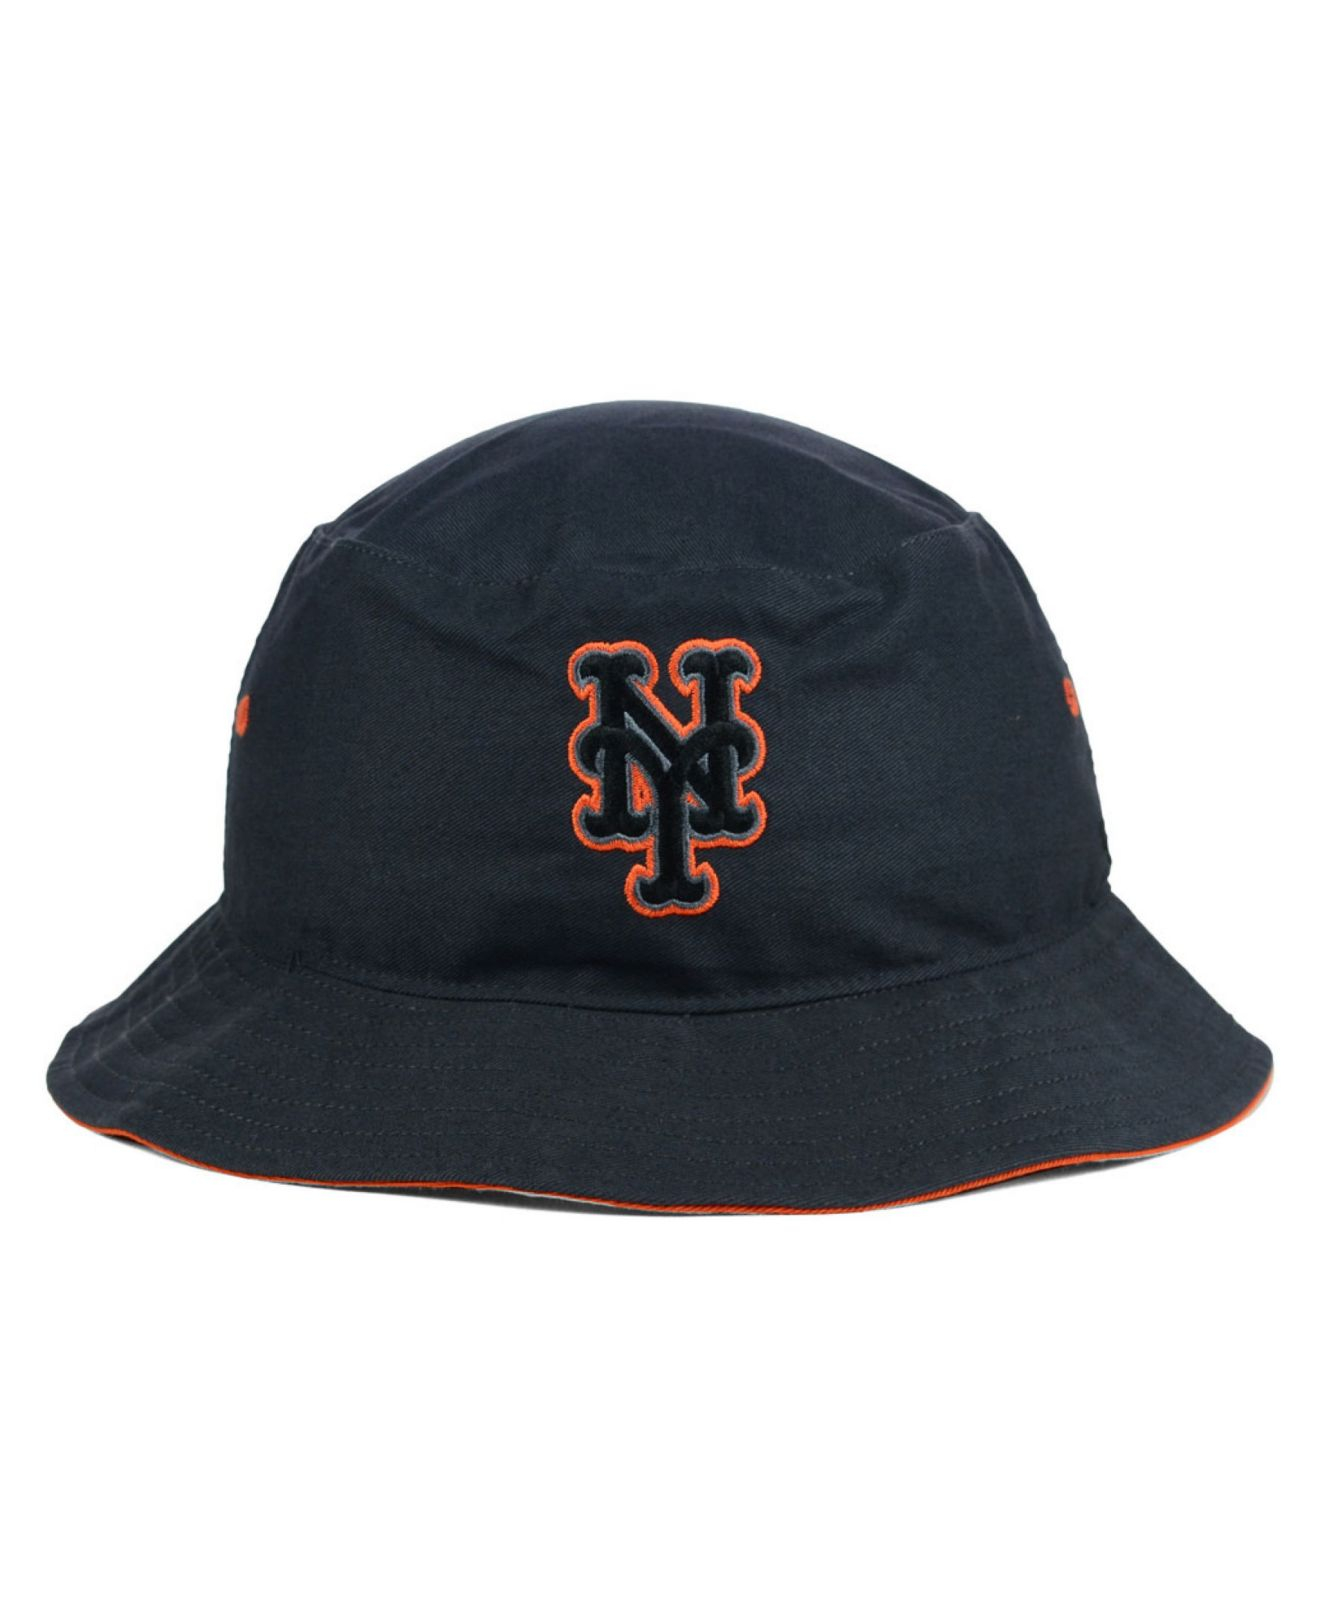 Lyst - 47 Brand New York Mets Turbo Bucket Hat in Gray